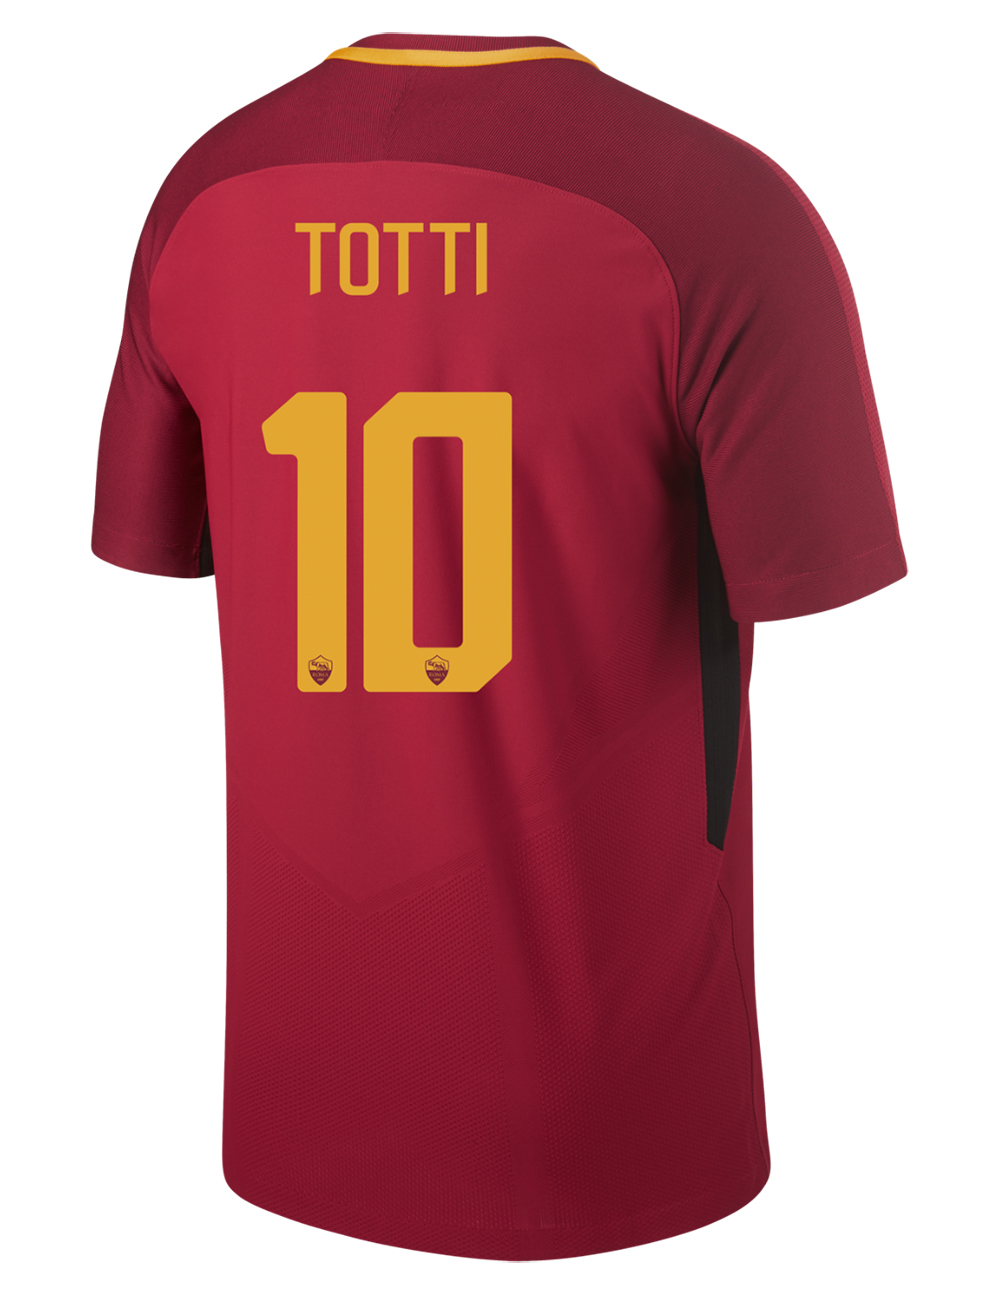 AS Roma Nike Home Kit 2017 18